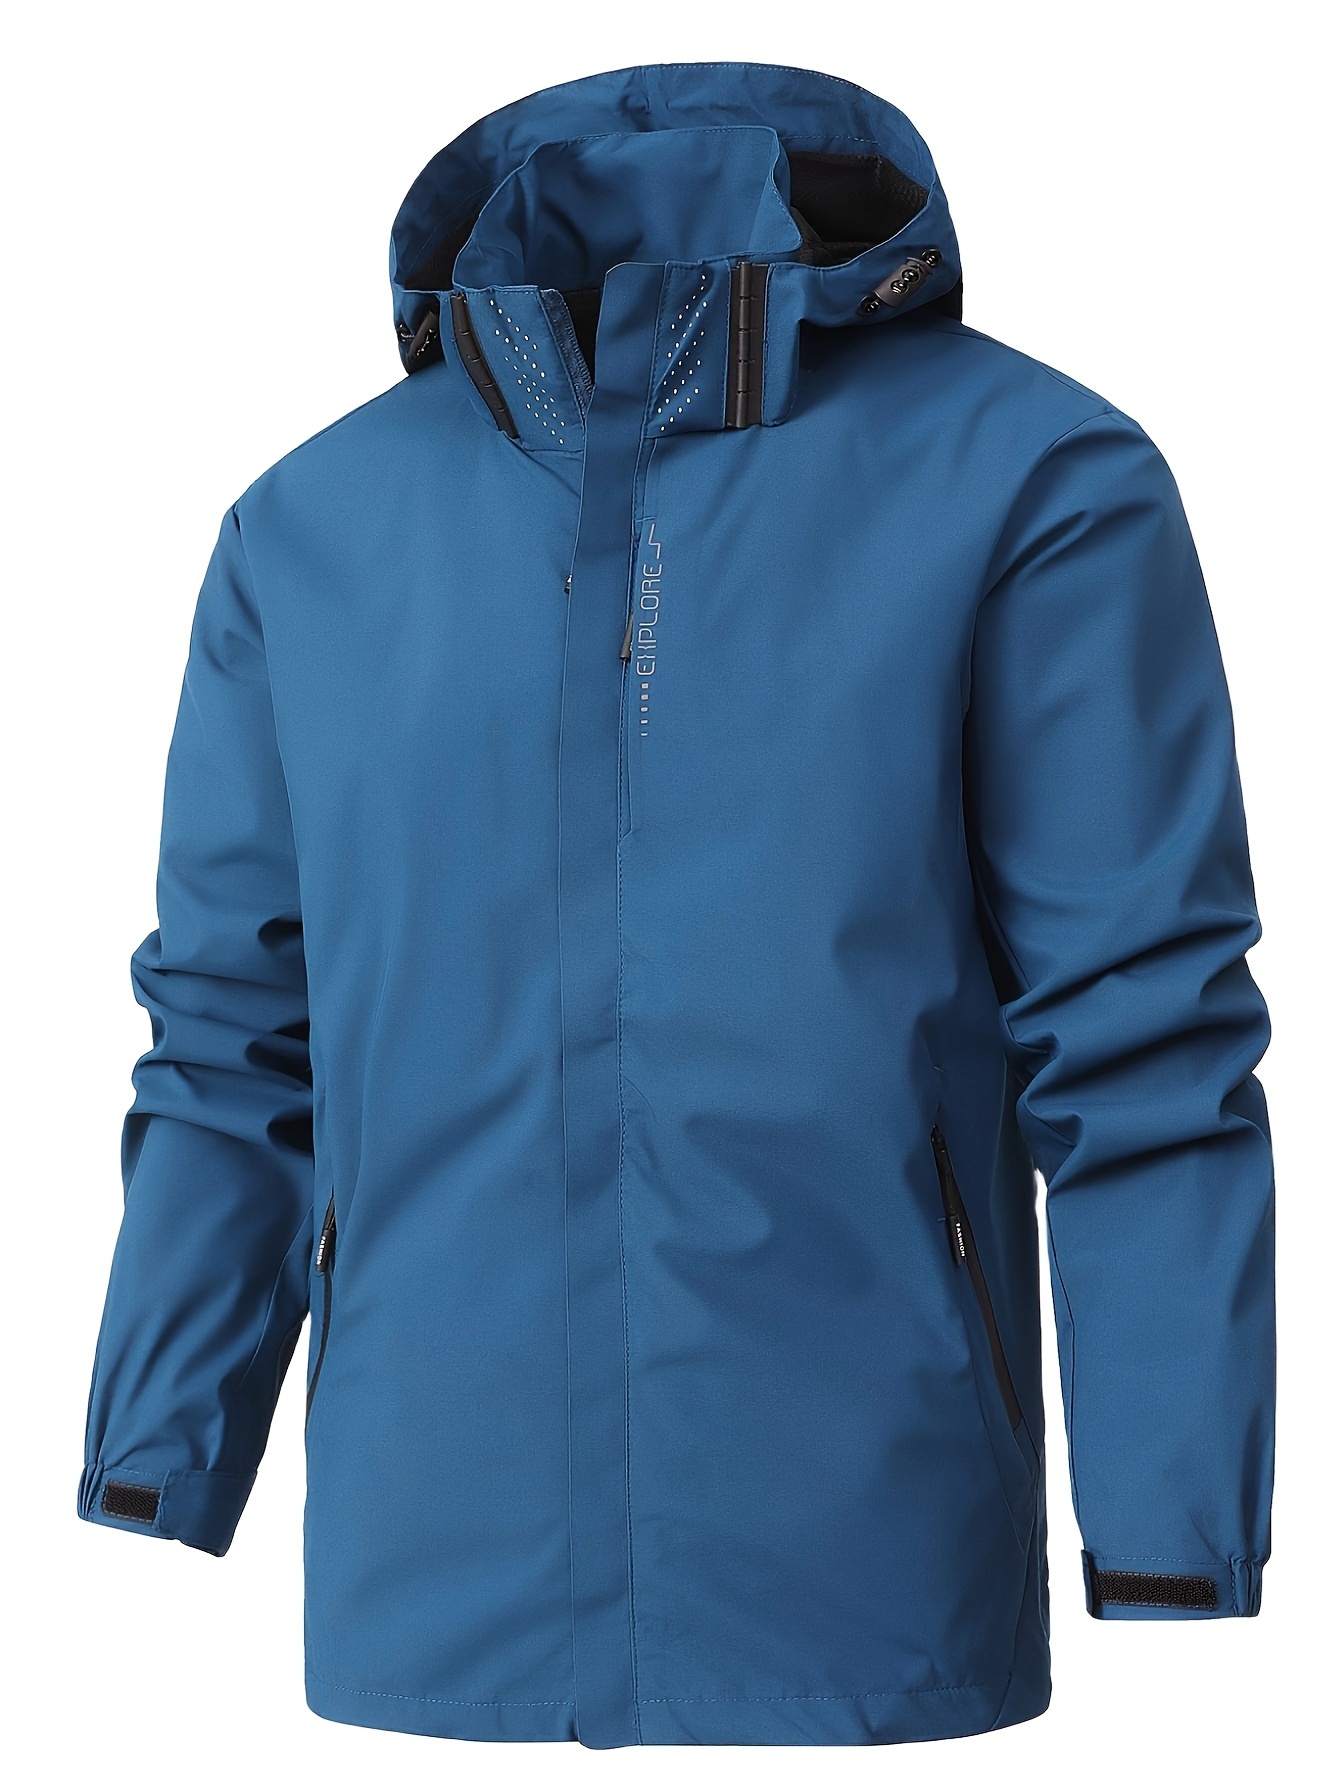 Men's Lightweight Waterproof Hooded Rain Jacket - Outdoor Hiking Windbreaker Coat